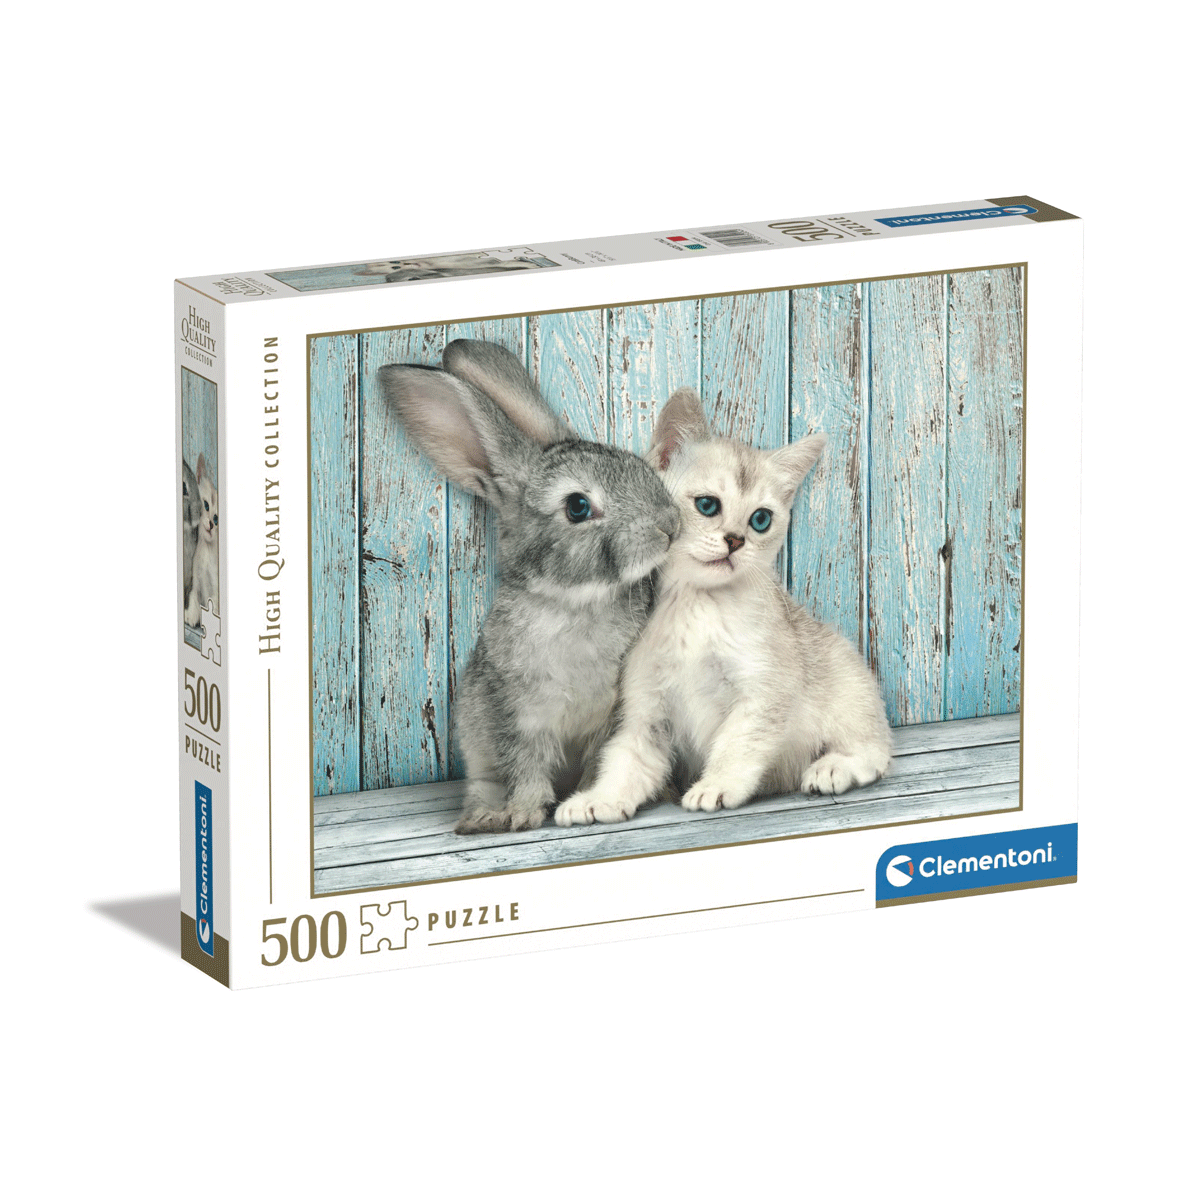 Clementoni puzzle high quality collection - cat & bunny - 500 pezzi, puzzle adulti - CLEMENTONI